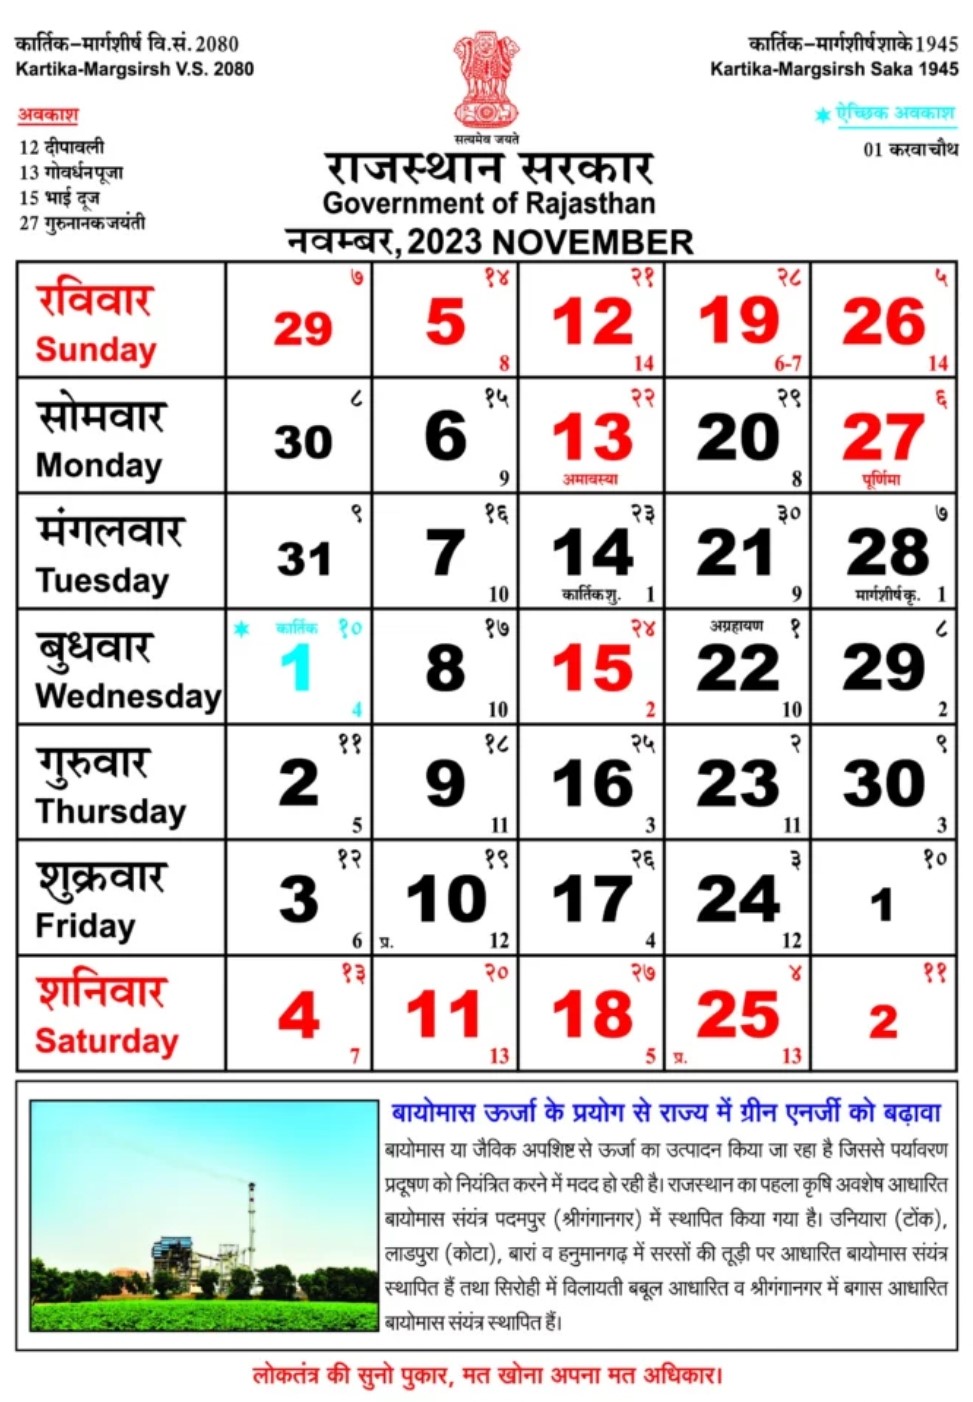 rajasthan-government-calendar-2023-rajasthan-sarkar-holidays-list-2023-pdf-download-ganpati-sevak